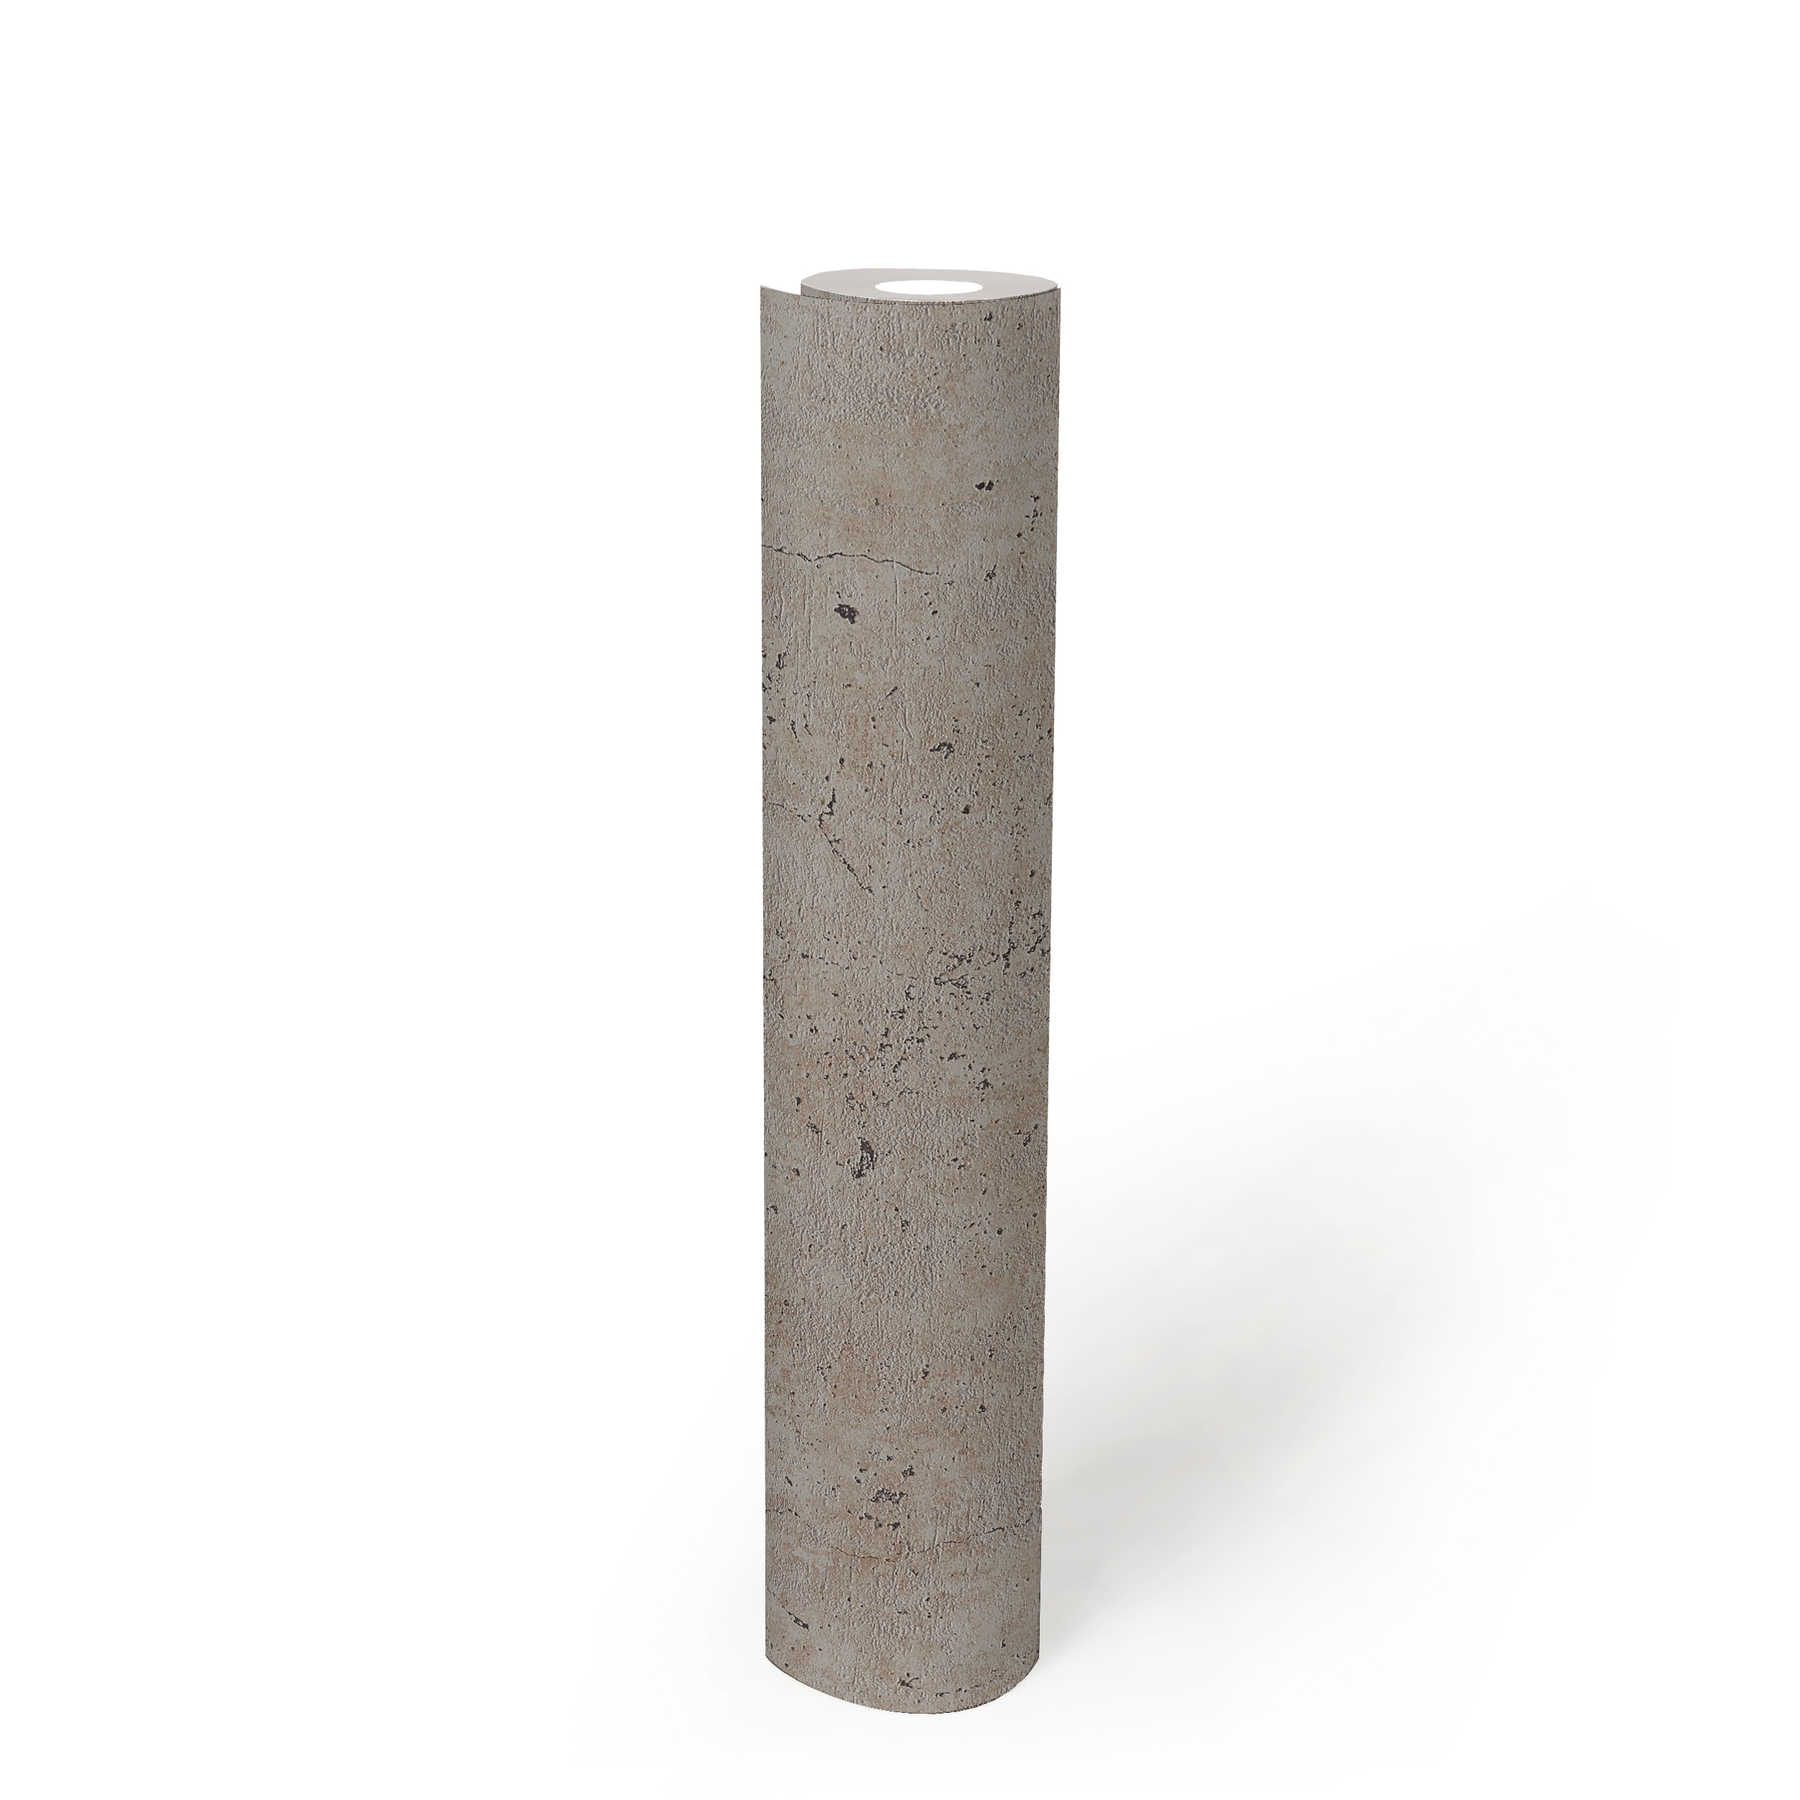             Wallpaper concrete look rustic in industrial style - grey, brown
        